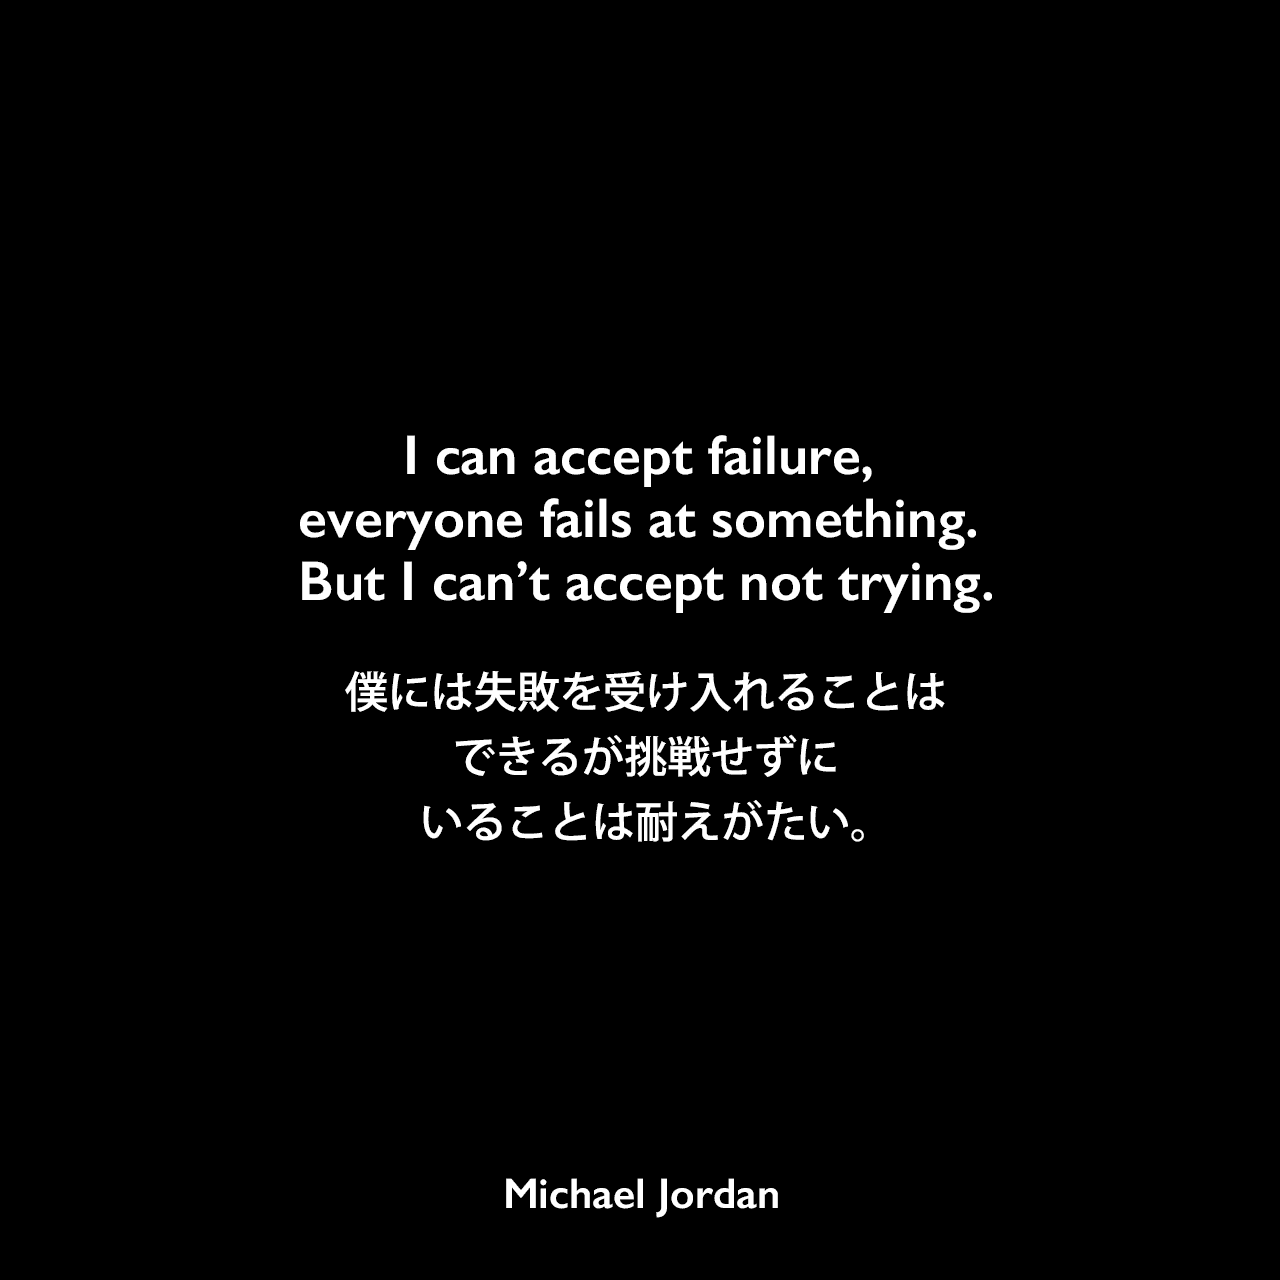 I can accept failure, everyone fails at something. But I can’t accept not trying.僕には失敗を受け入れることはできるが、挑戦せずにいることは耐えがたい。